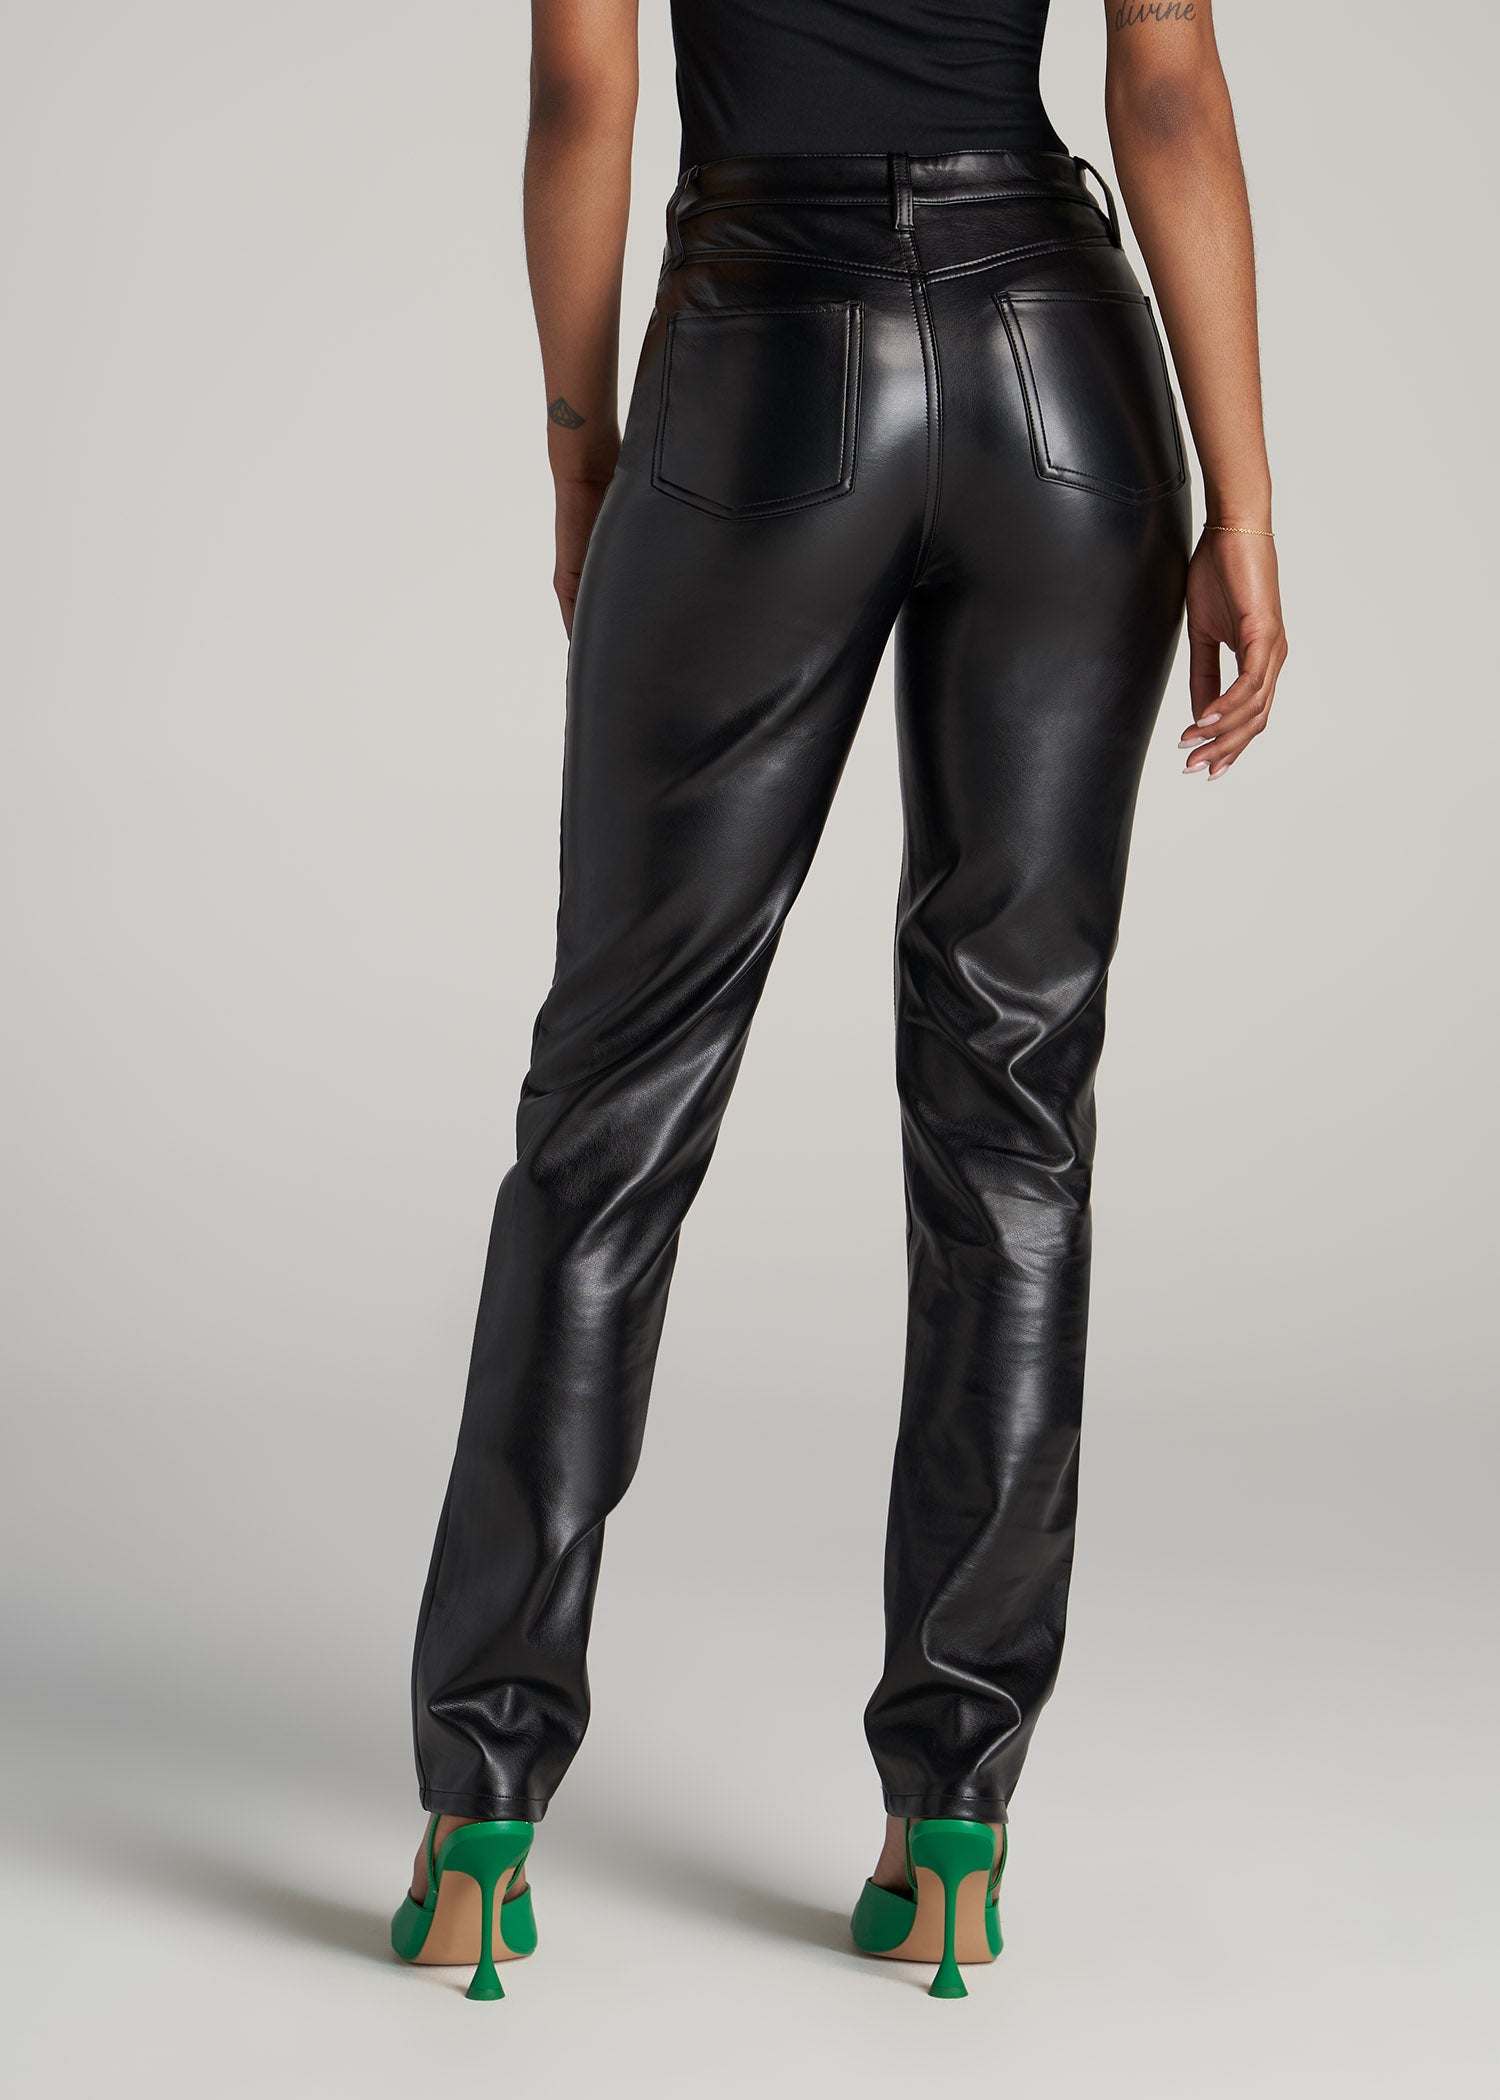 ASEIDFNSA Leather Pants Women Plus Size Tall Women Leather